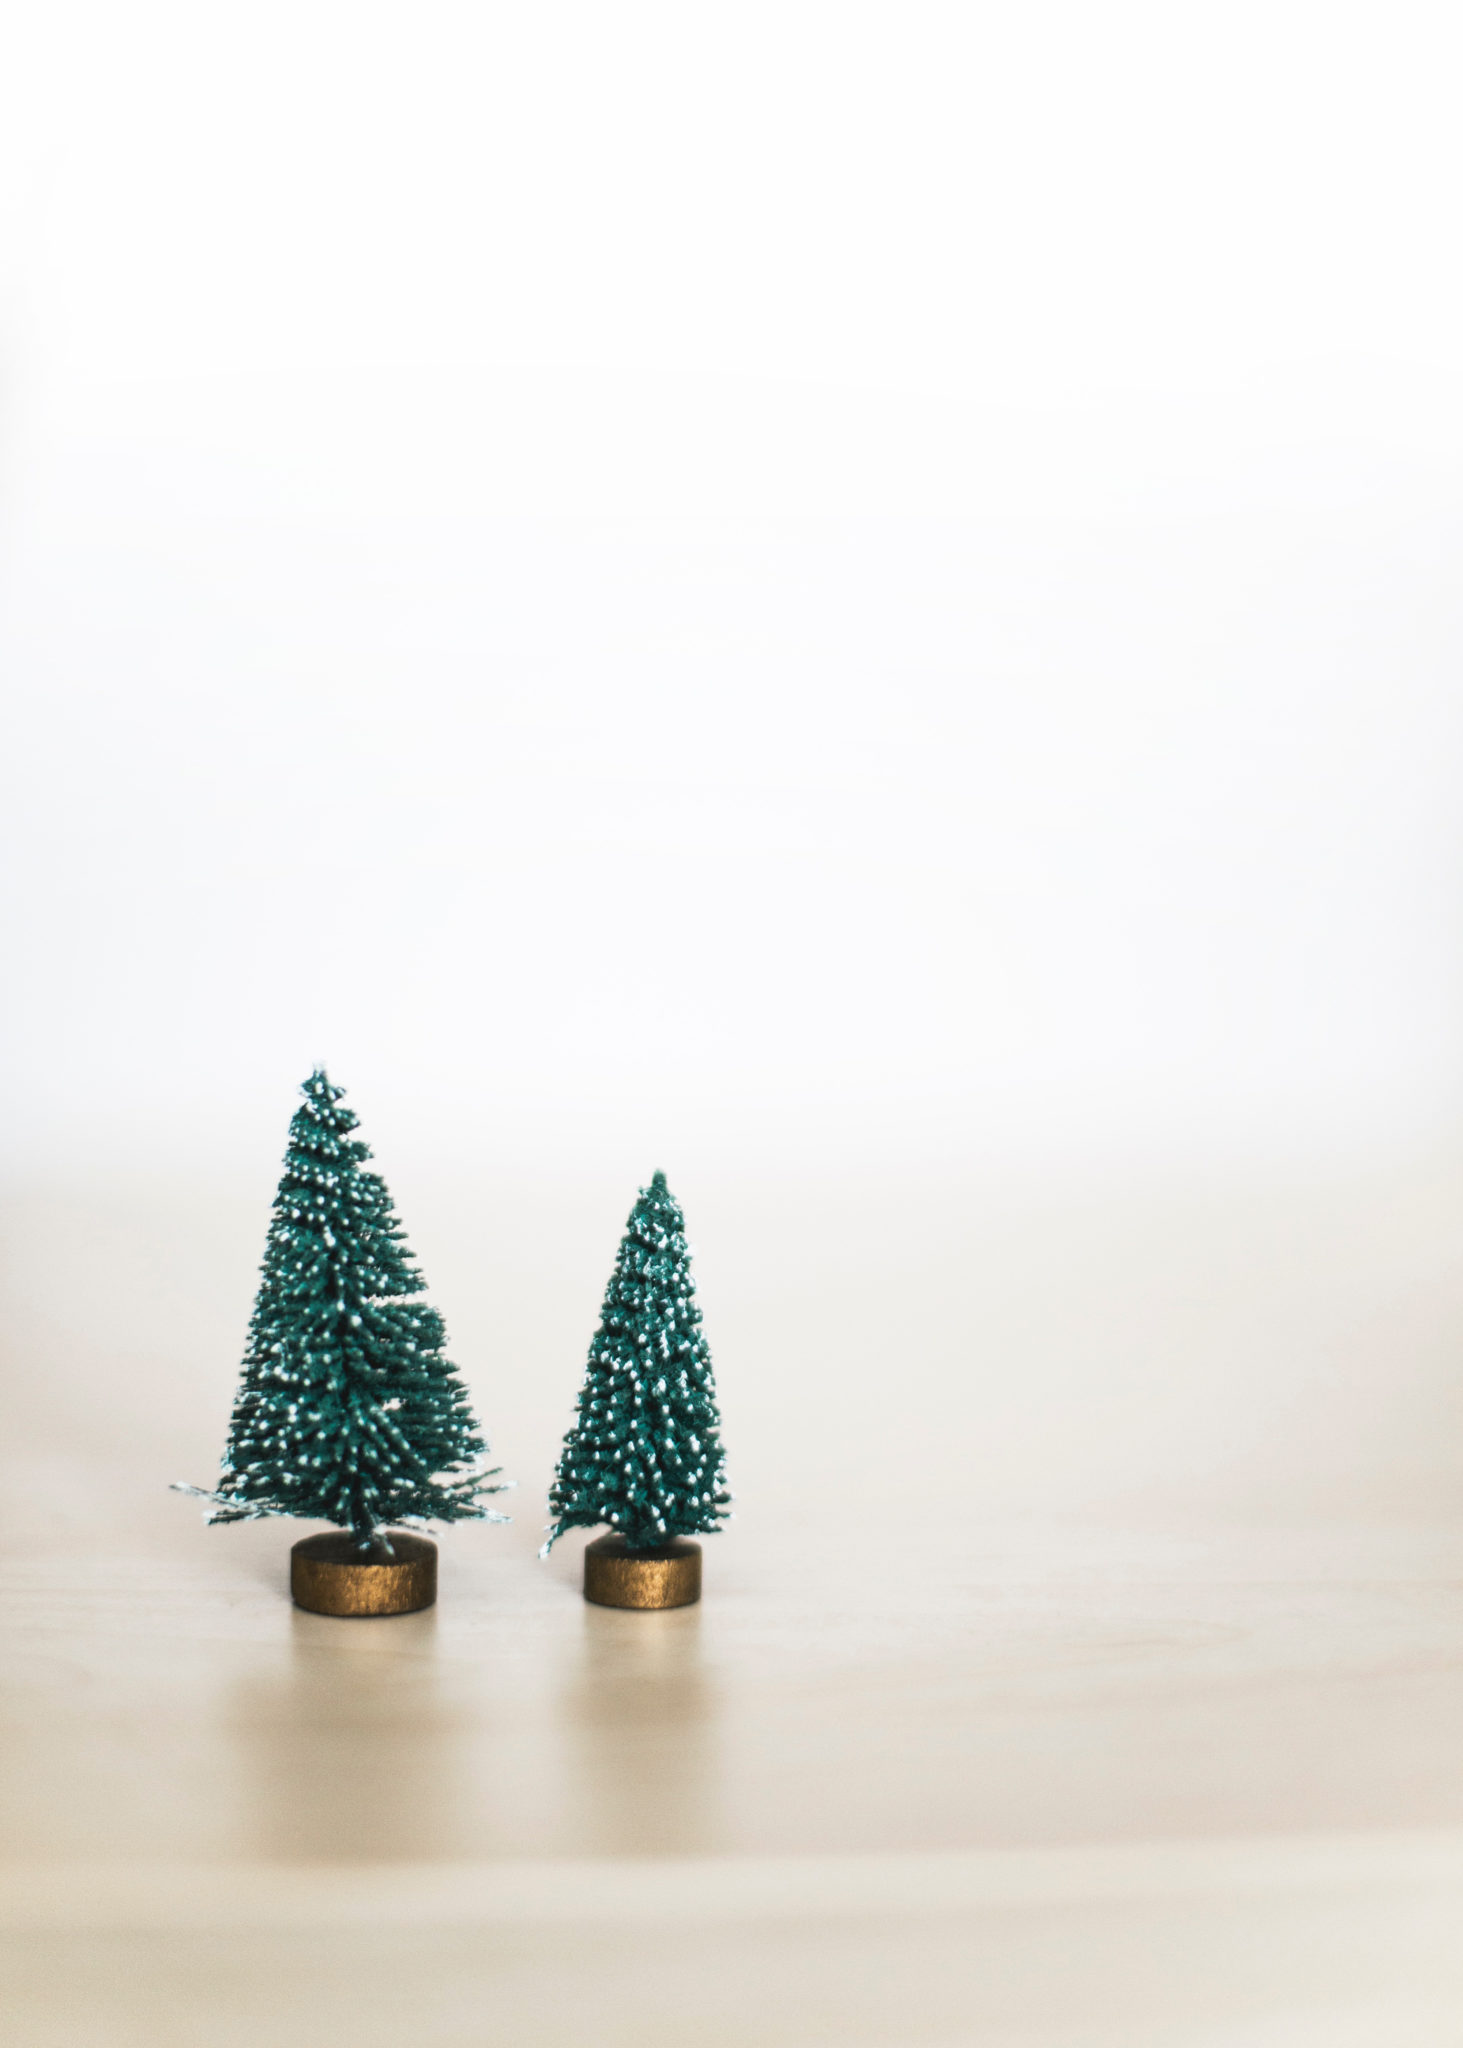 Small decorative pine trees